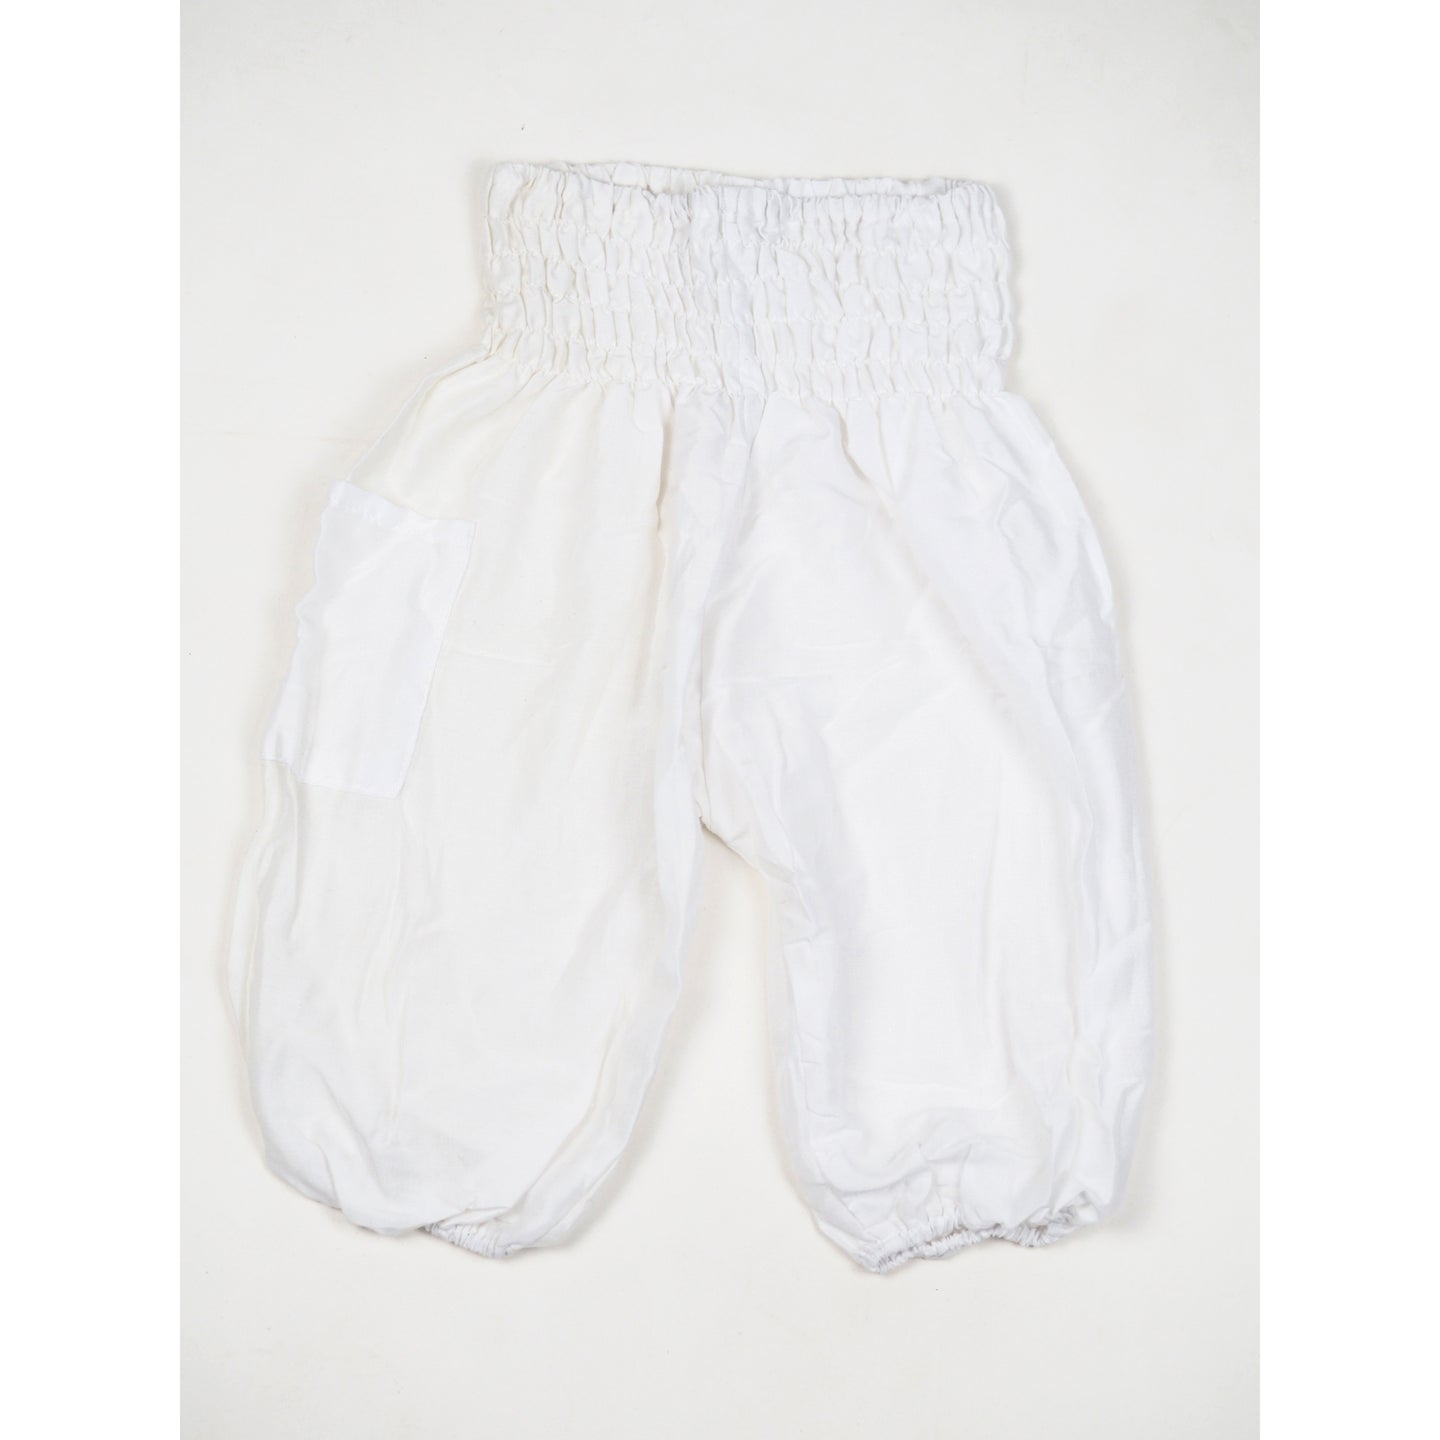 Solid color Unisex Kid Harem Pants in White PP0004 020000 04